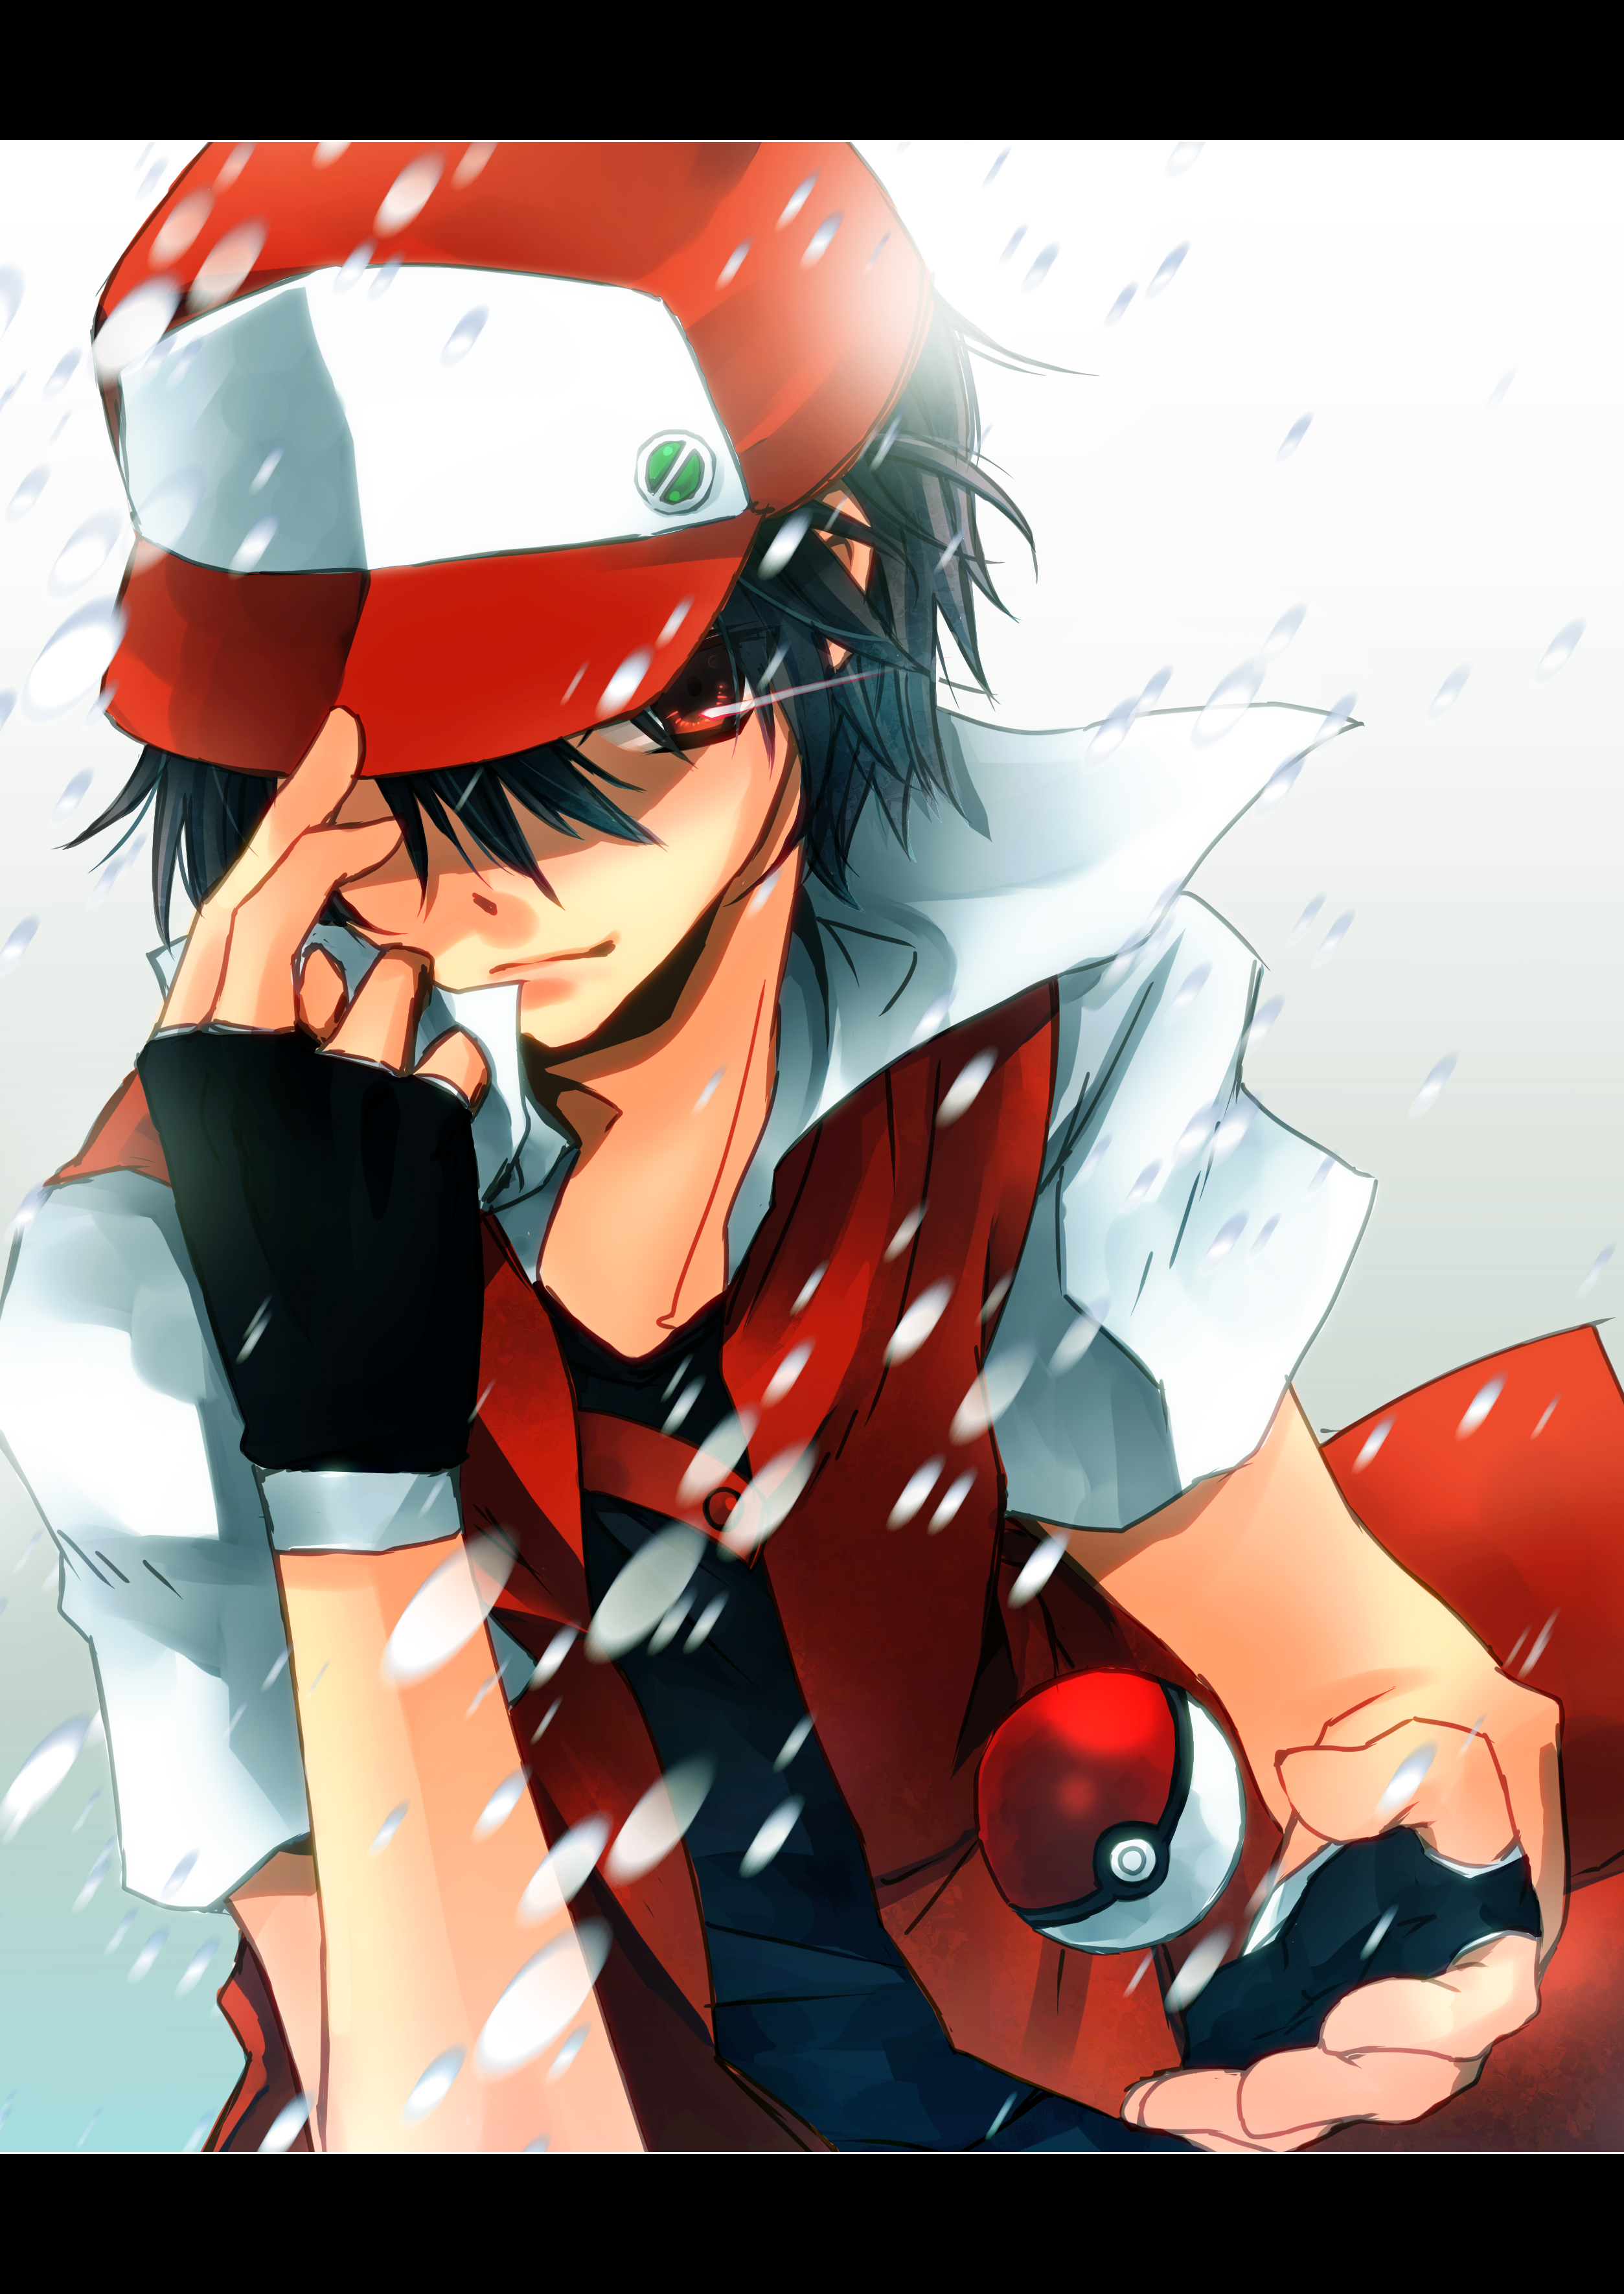 red pokemon ash